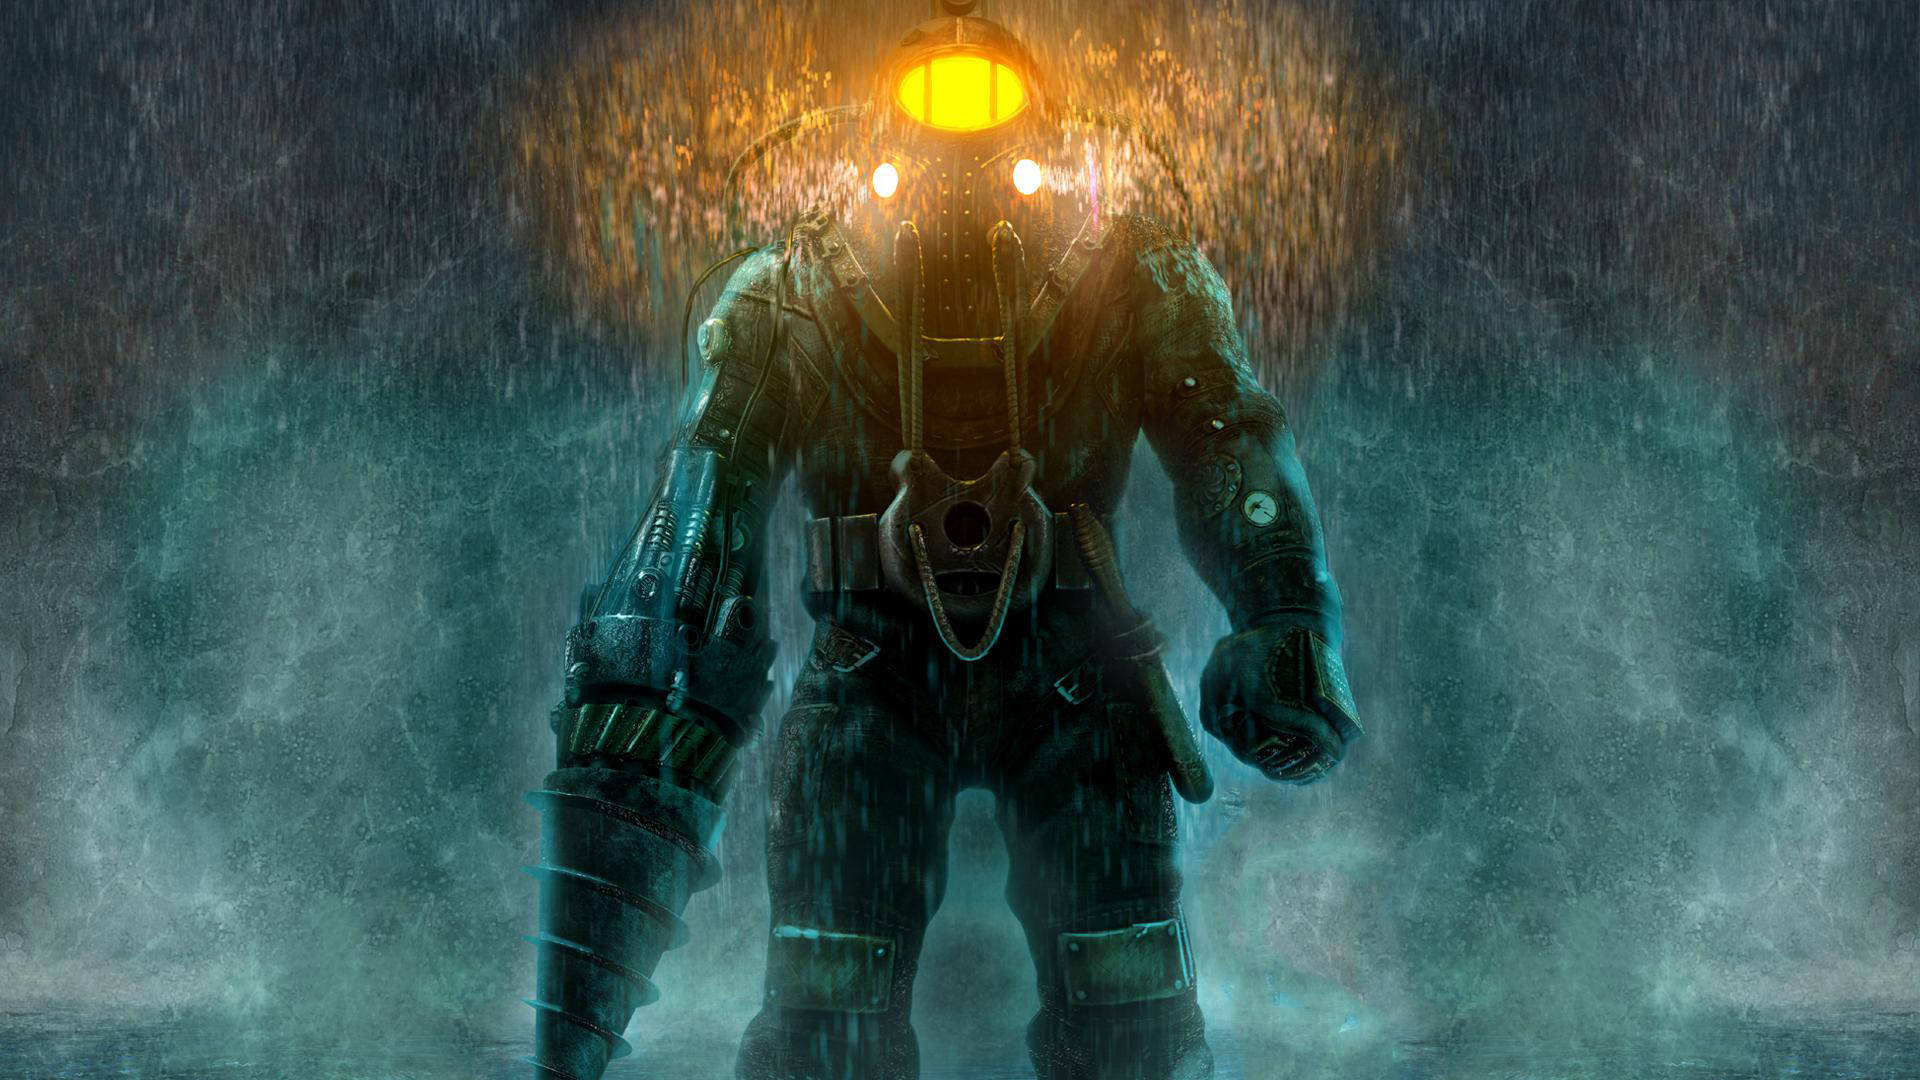 Tadin Spelupplevelse Till Nya Höjder Med Bioshock Infinite Med Hjälp Av Din Dator- Eller Mobilbakgrundsbild! Wallpaper